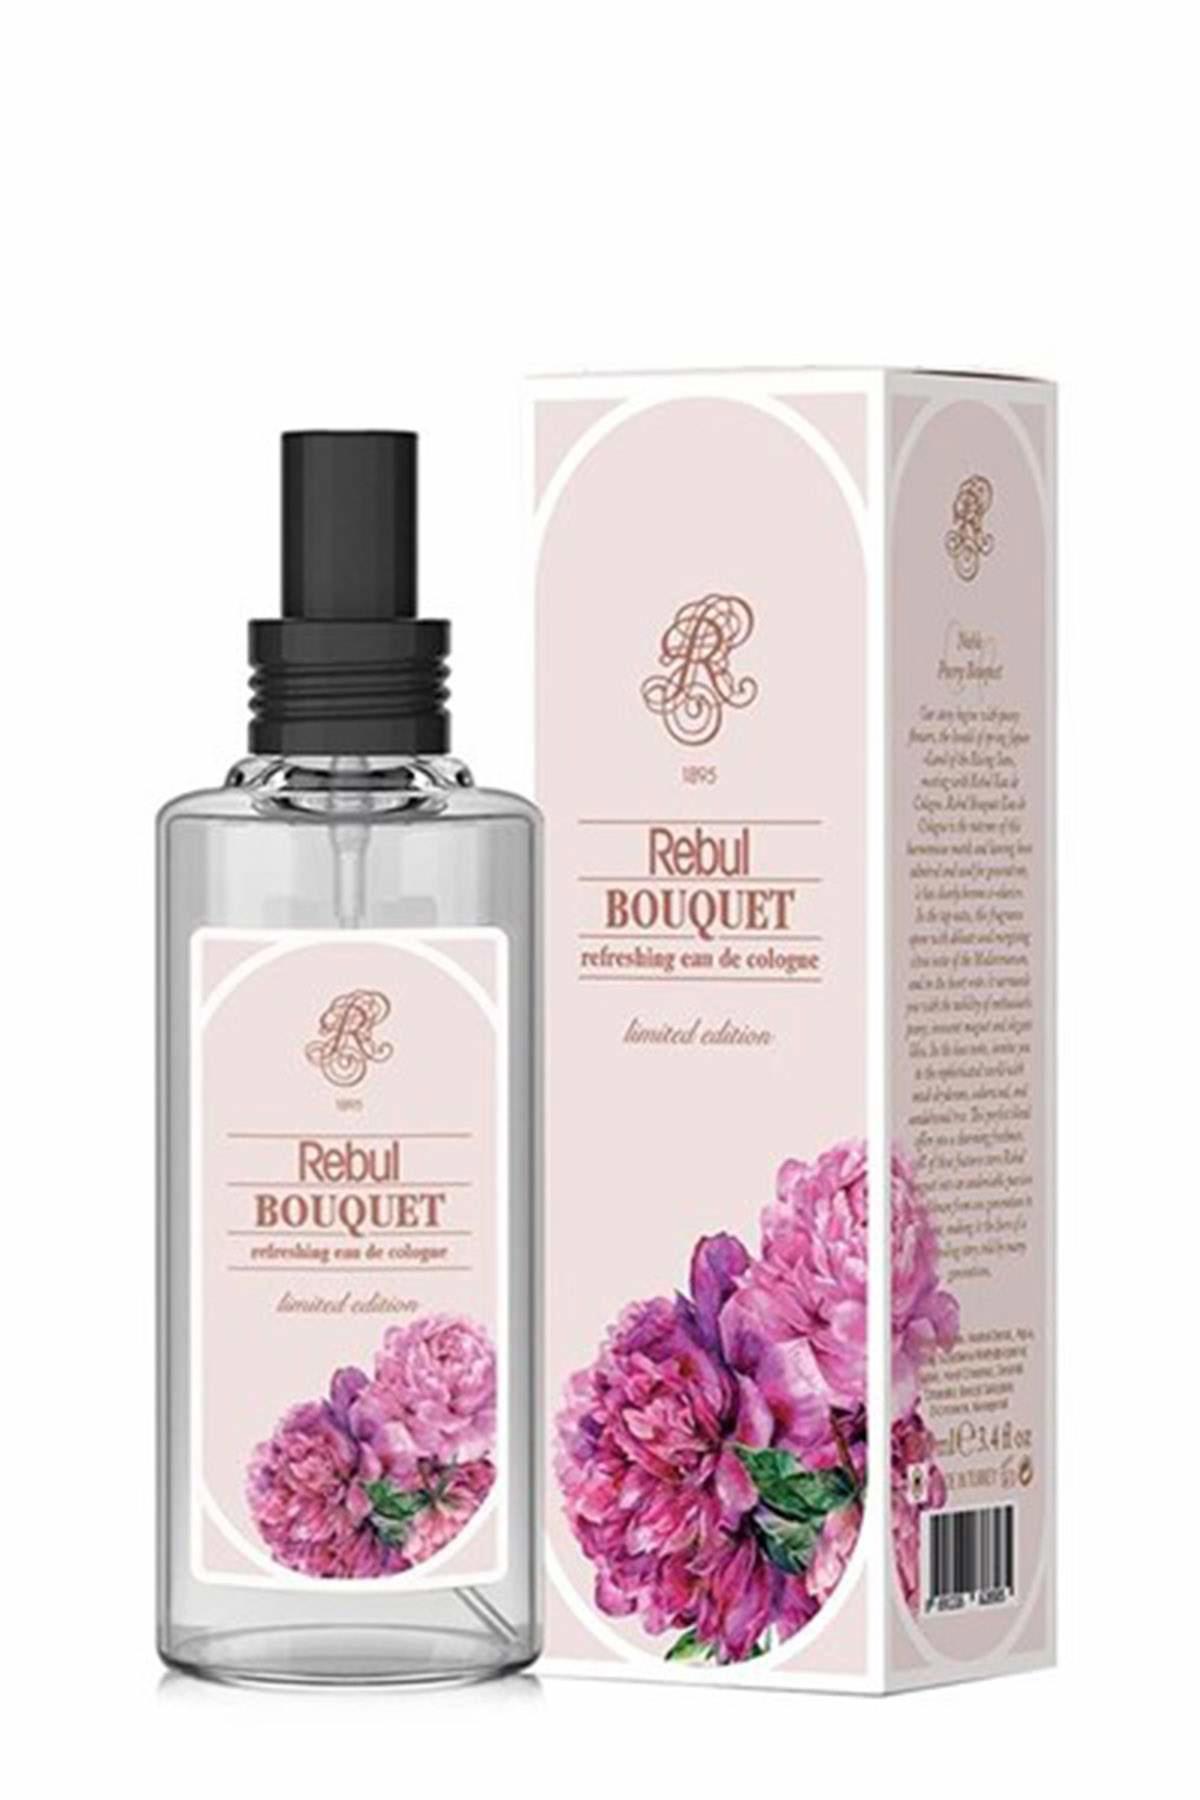 Rebul Bouquet Cam Şişe Kolonya 100 ml